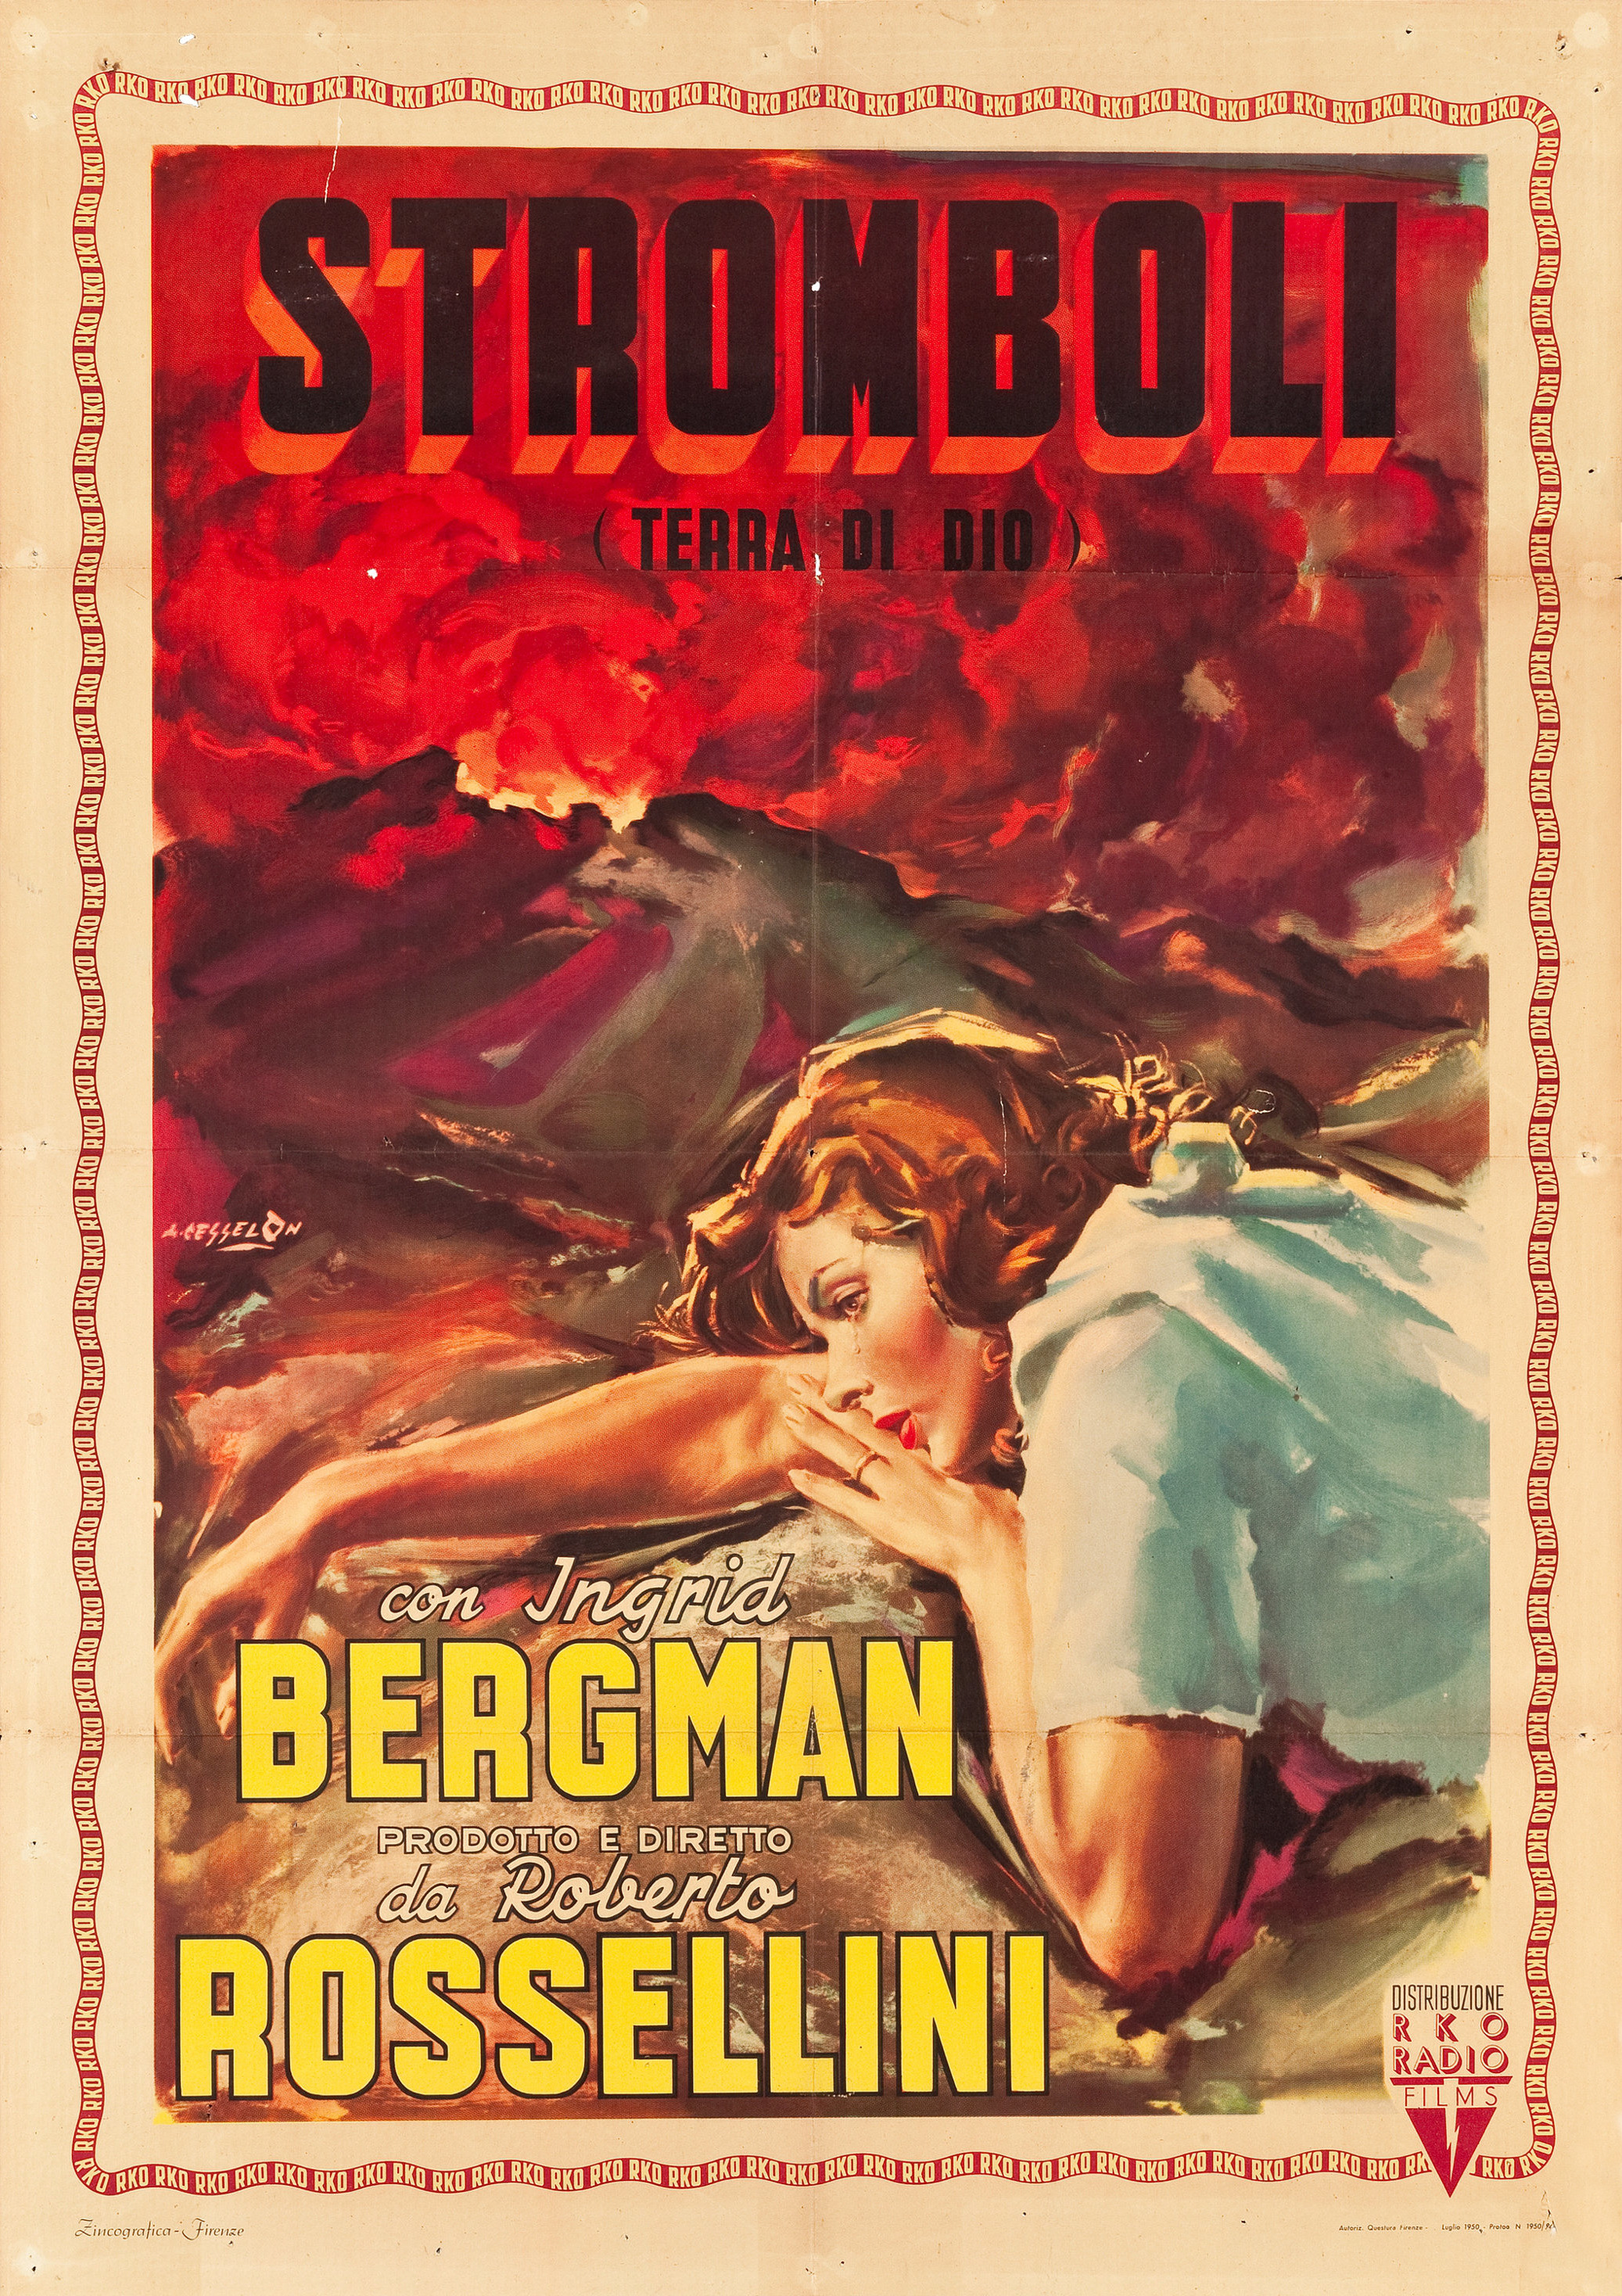 Mega Sized Movie Poster Image for Stromboli (#2 of 2)